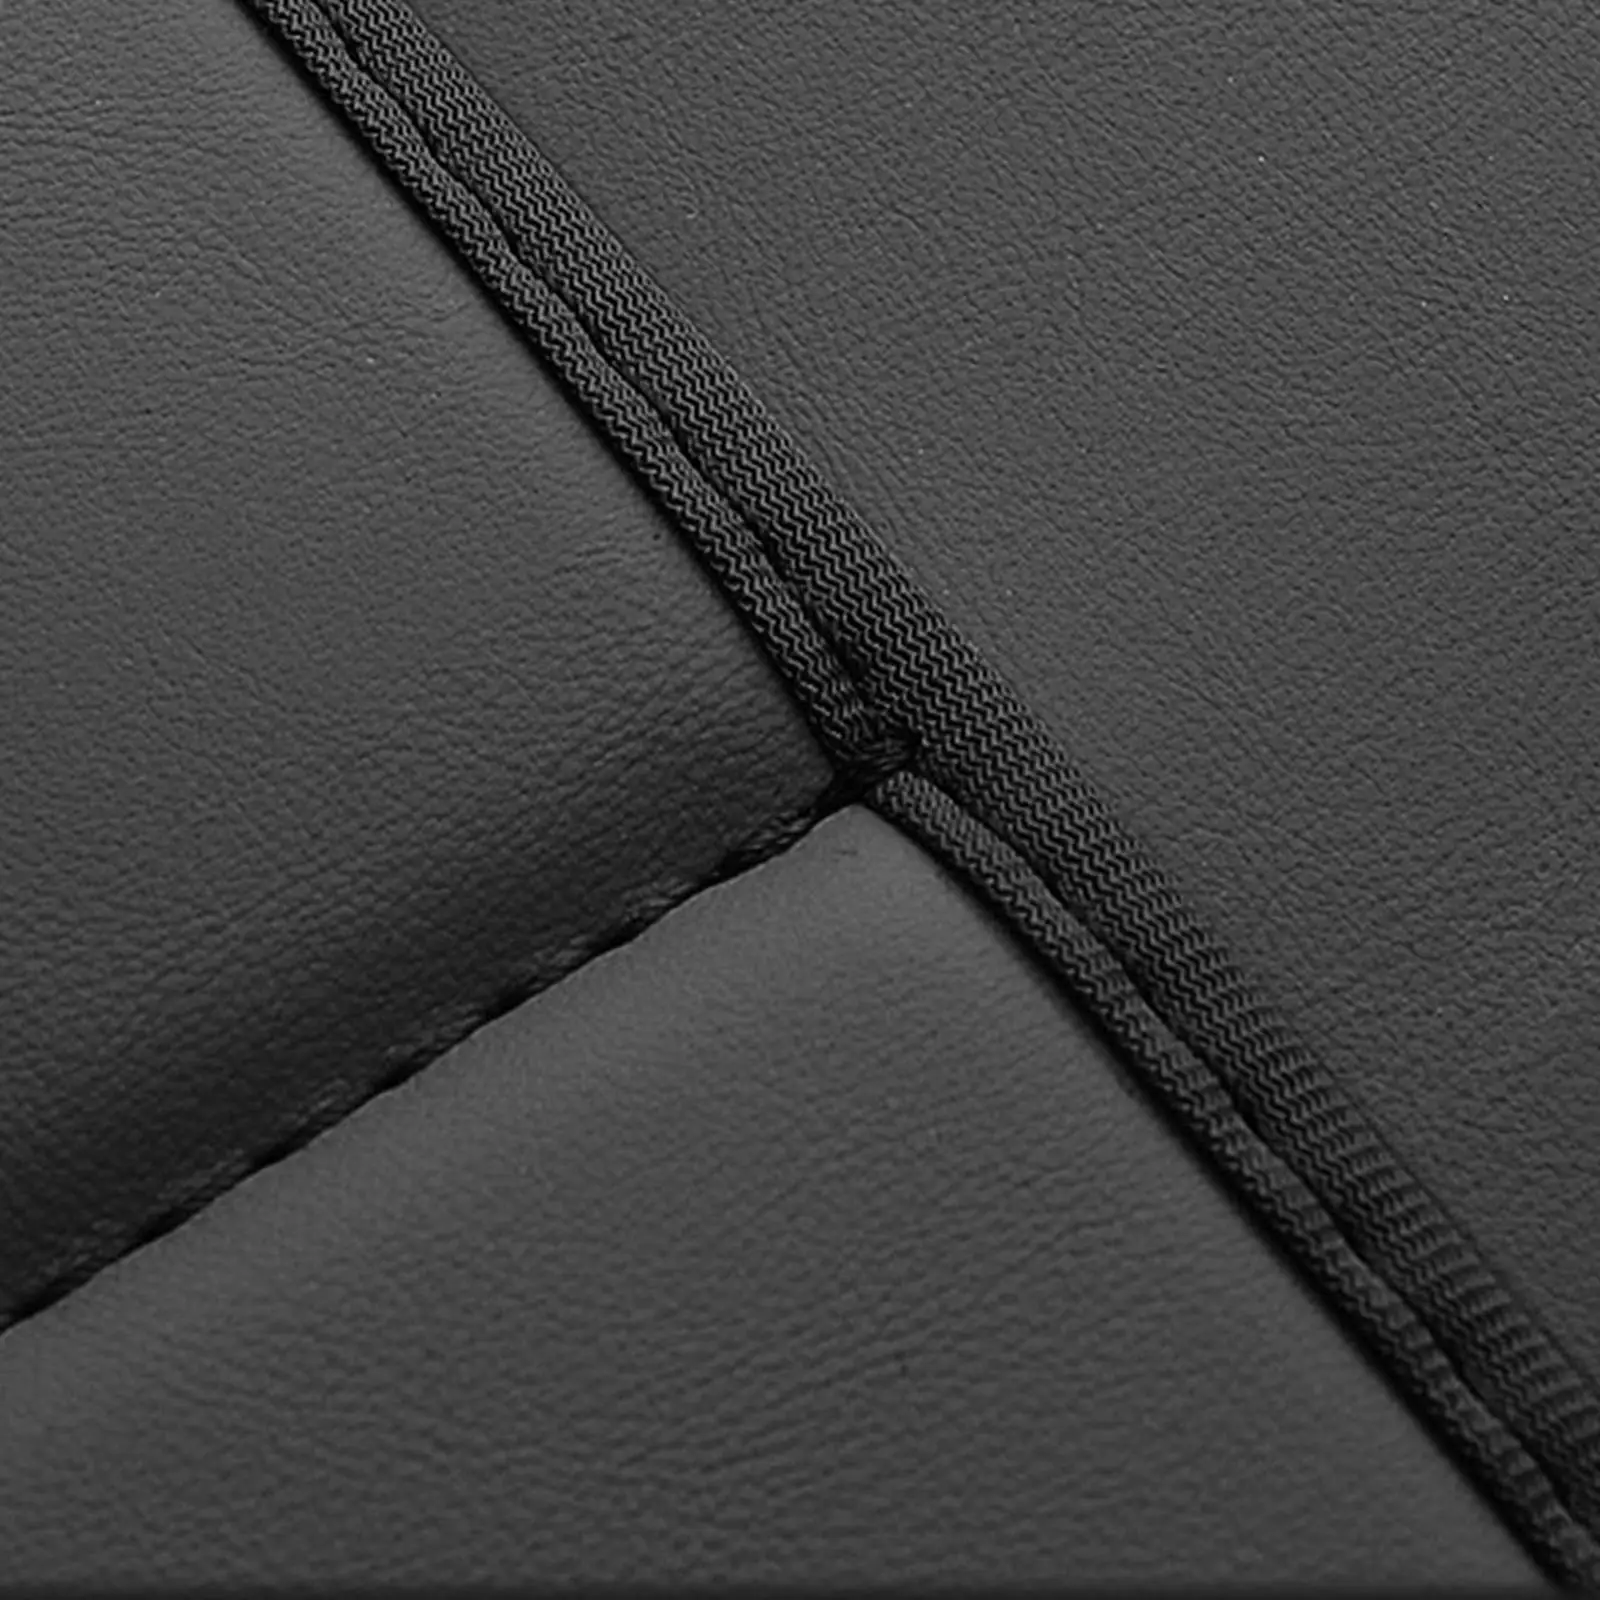 Seat back Anti Kick Pad Protector Decoration Seat Back Cover Kick Mats for Tesla Model 3 Model Y Premium Spare Parts